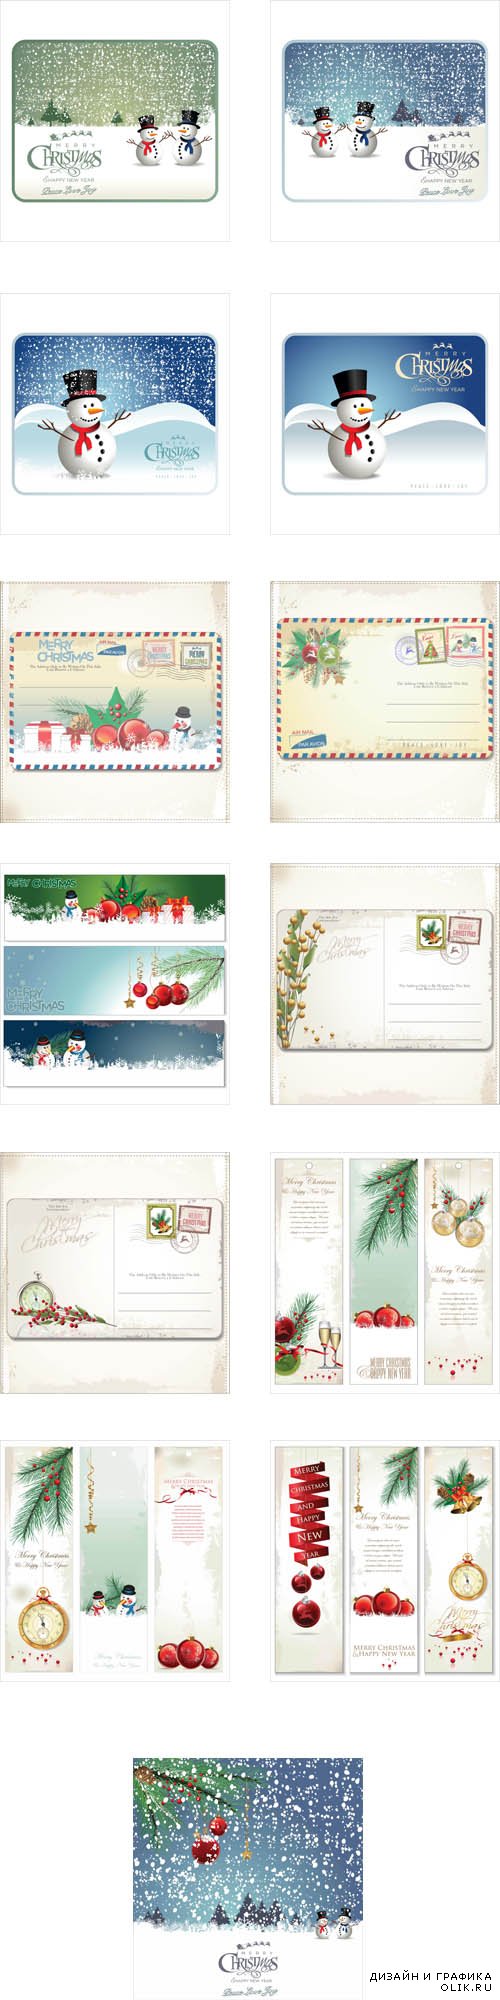 Christmas cards 0554